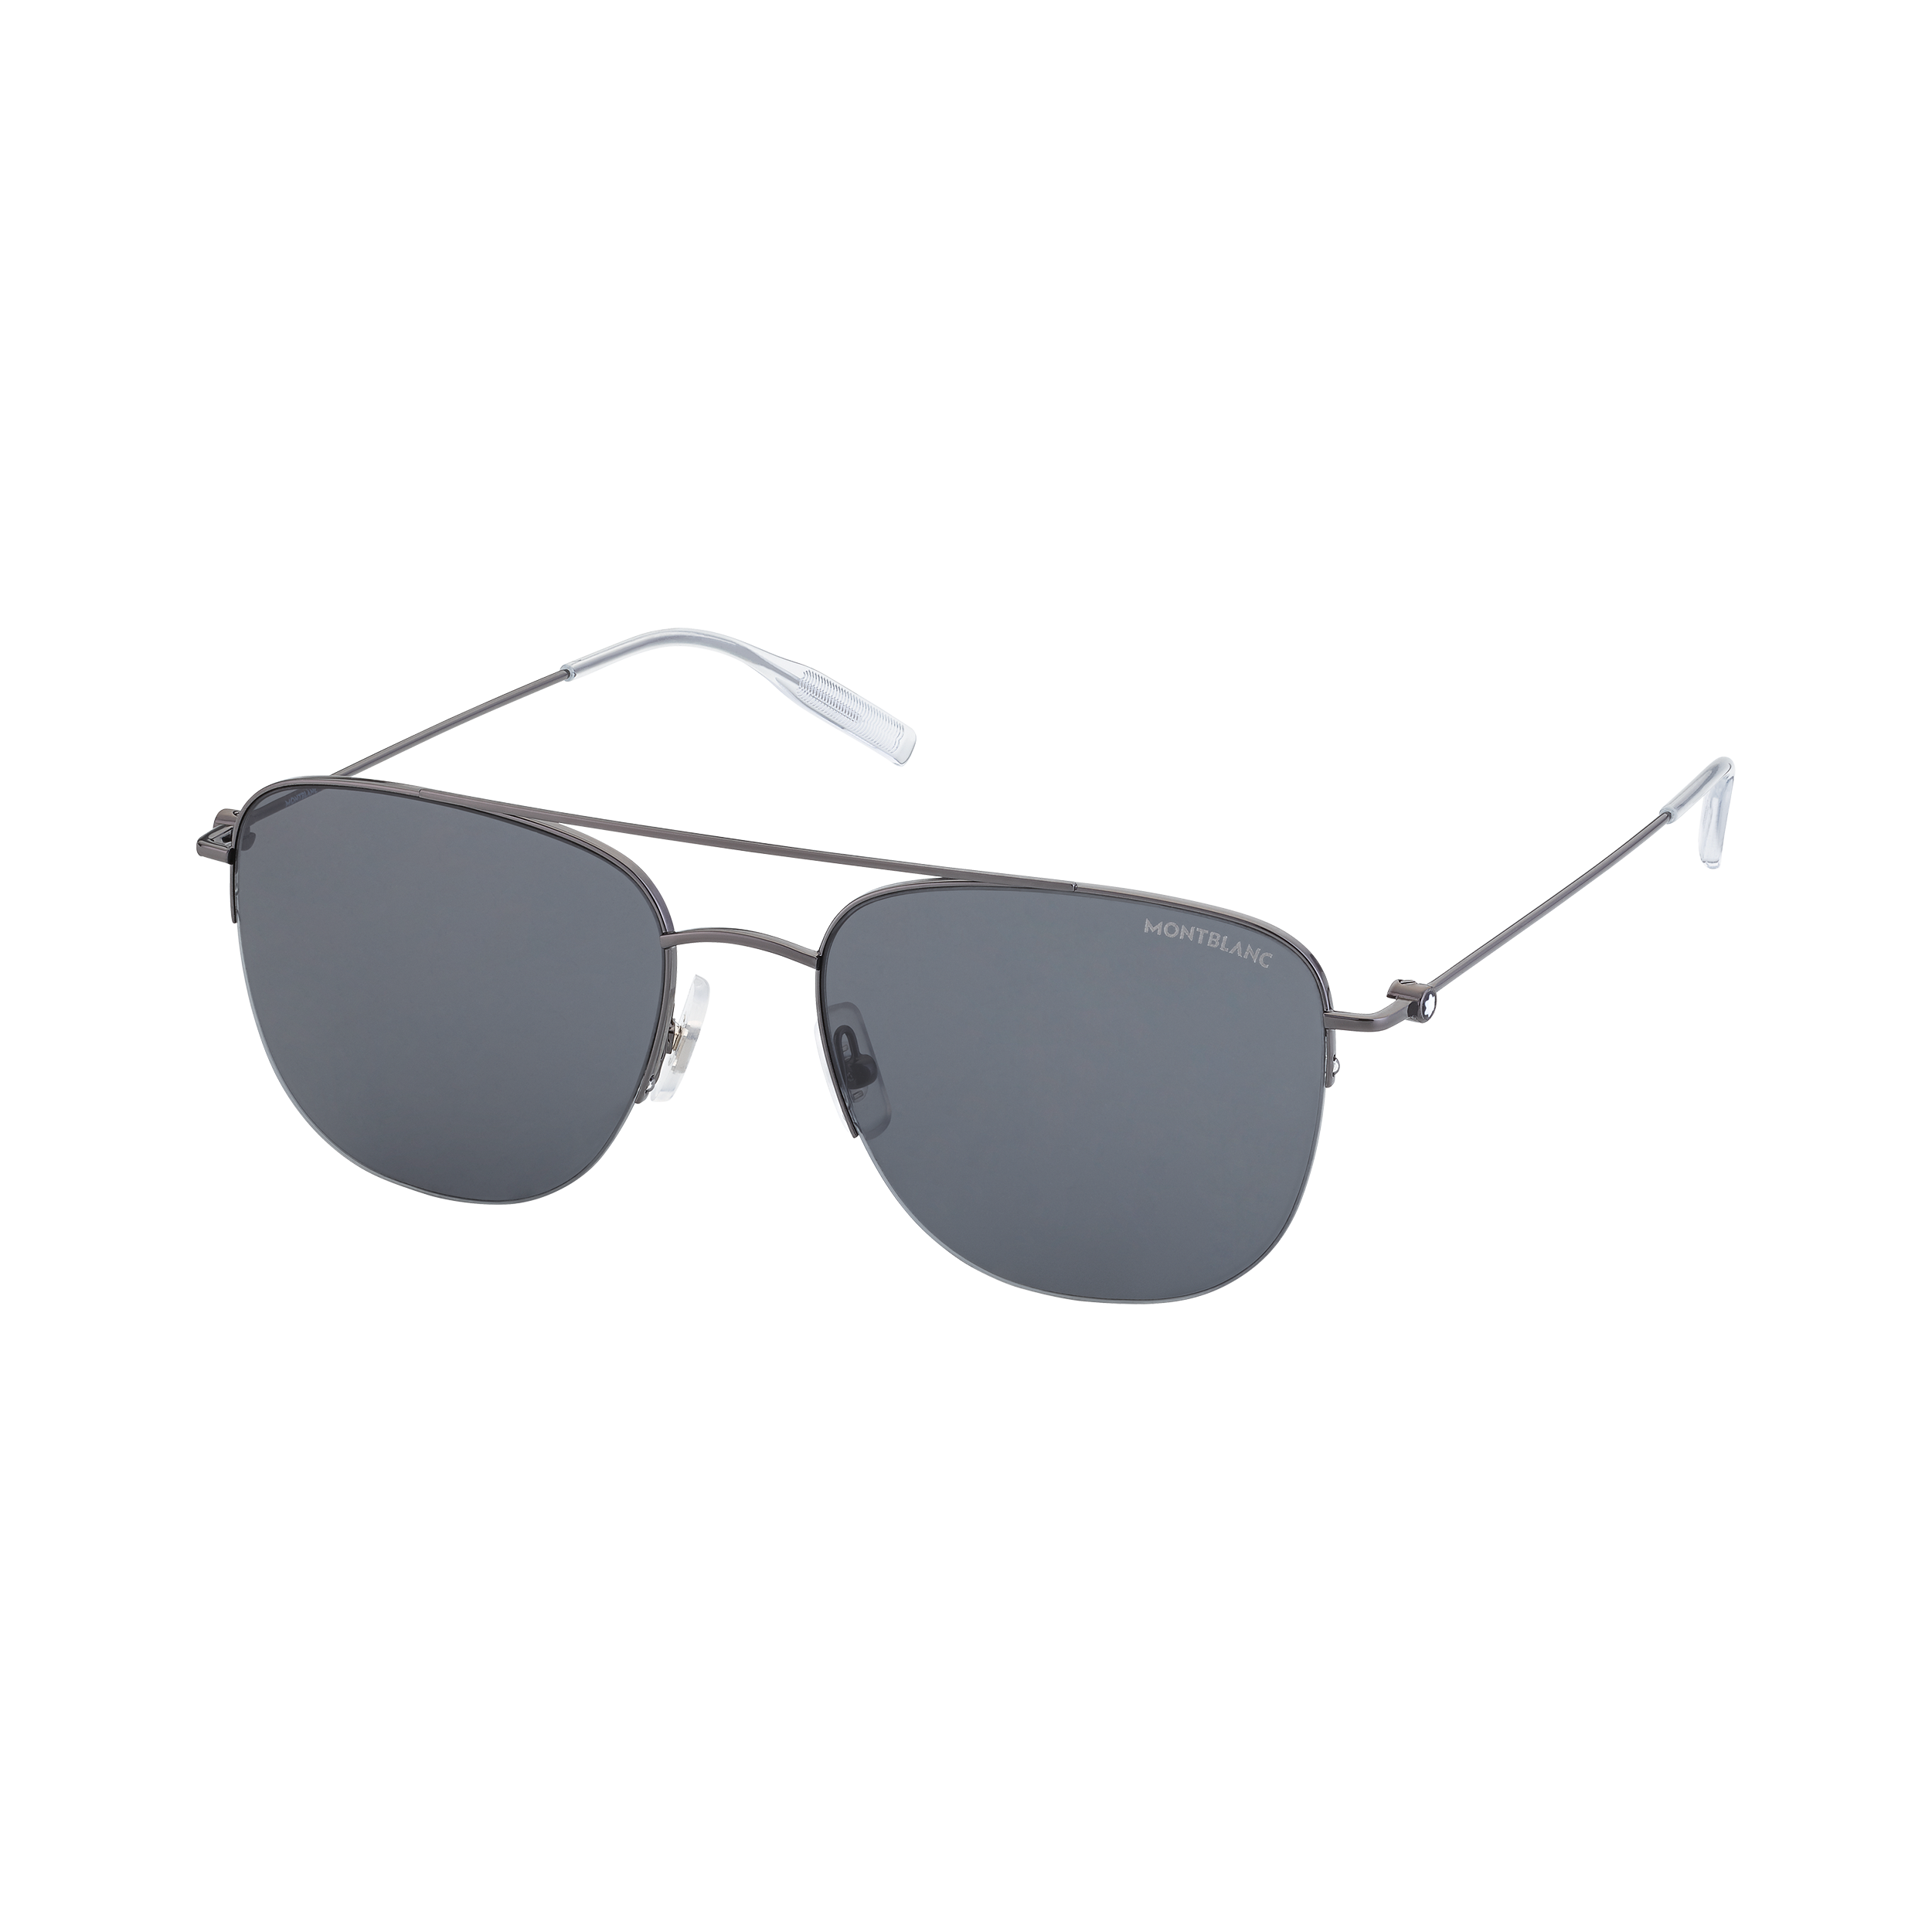 Rectangular Ruthenium Metal Frame Sunglasses, image 1